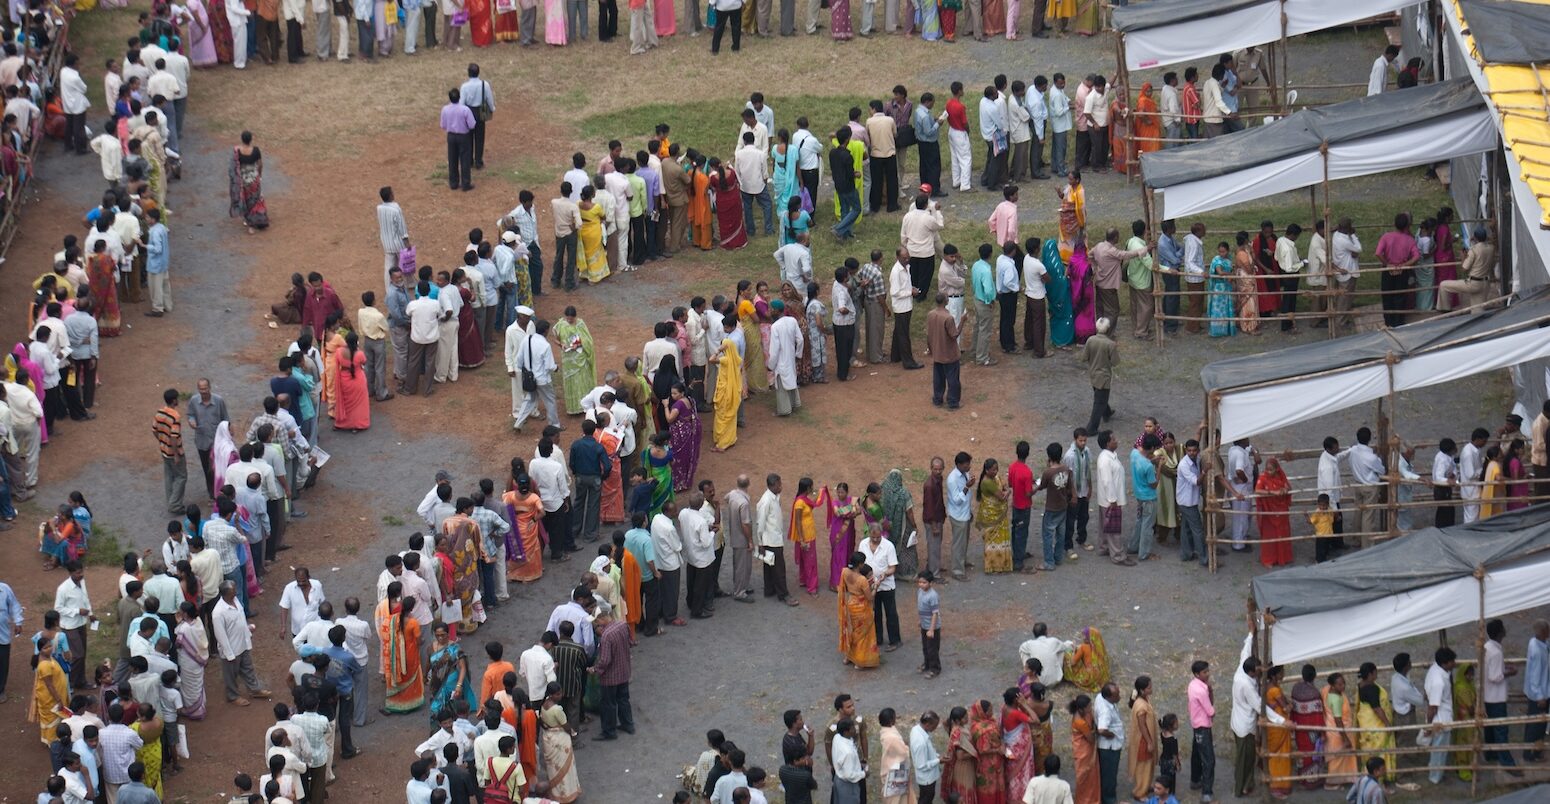 Voting queue at election polling station, Mumbai, India. Image ID: DH36MY. Credit: Dinodia Photos / Alamy Stock Photo.